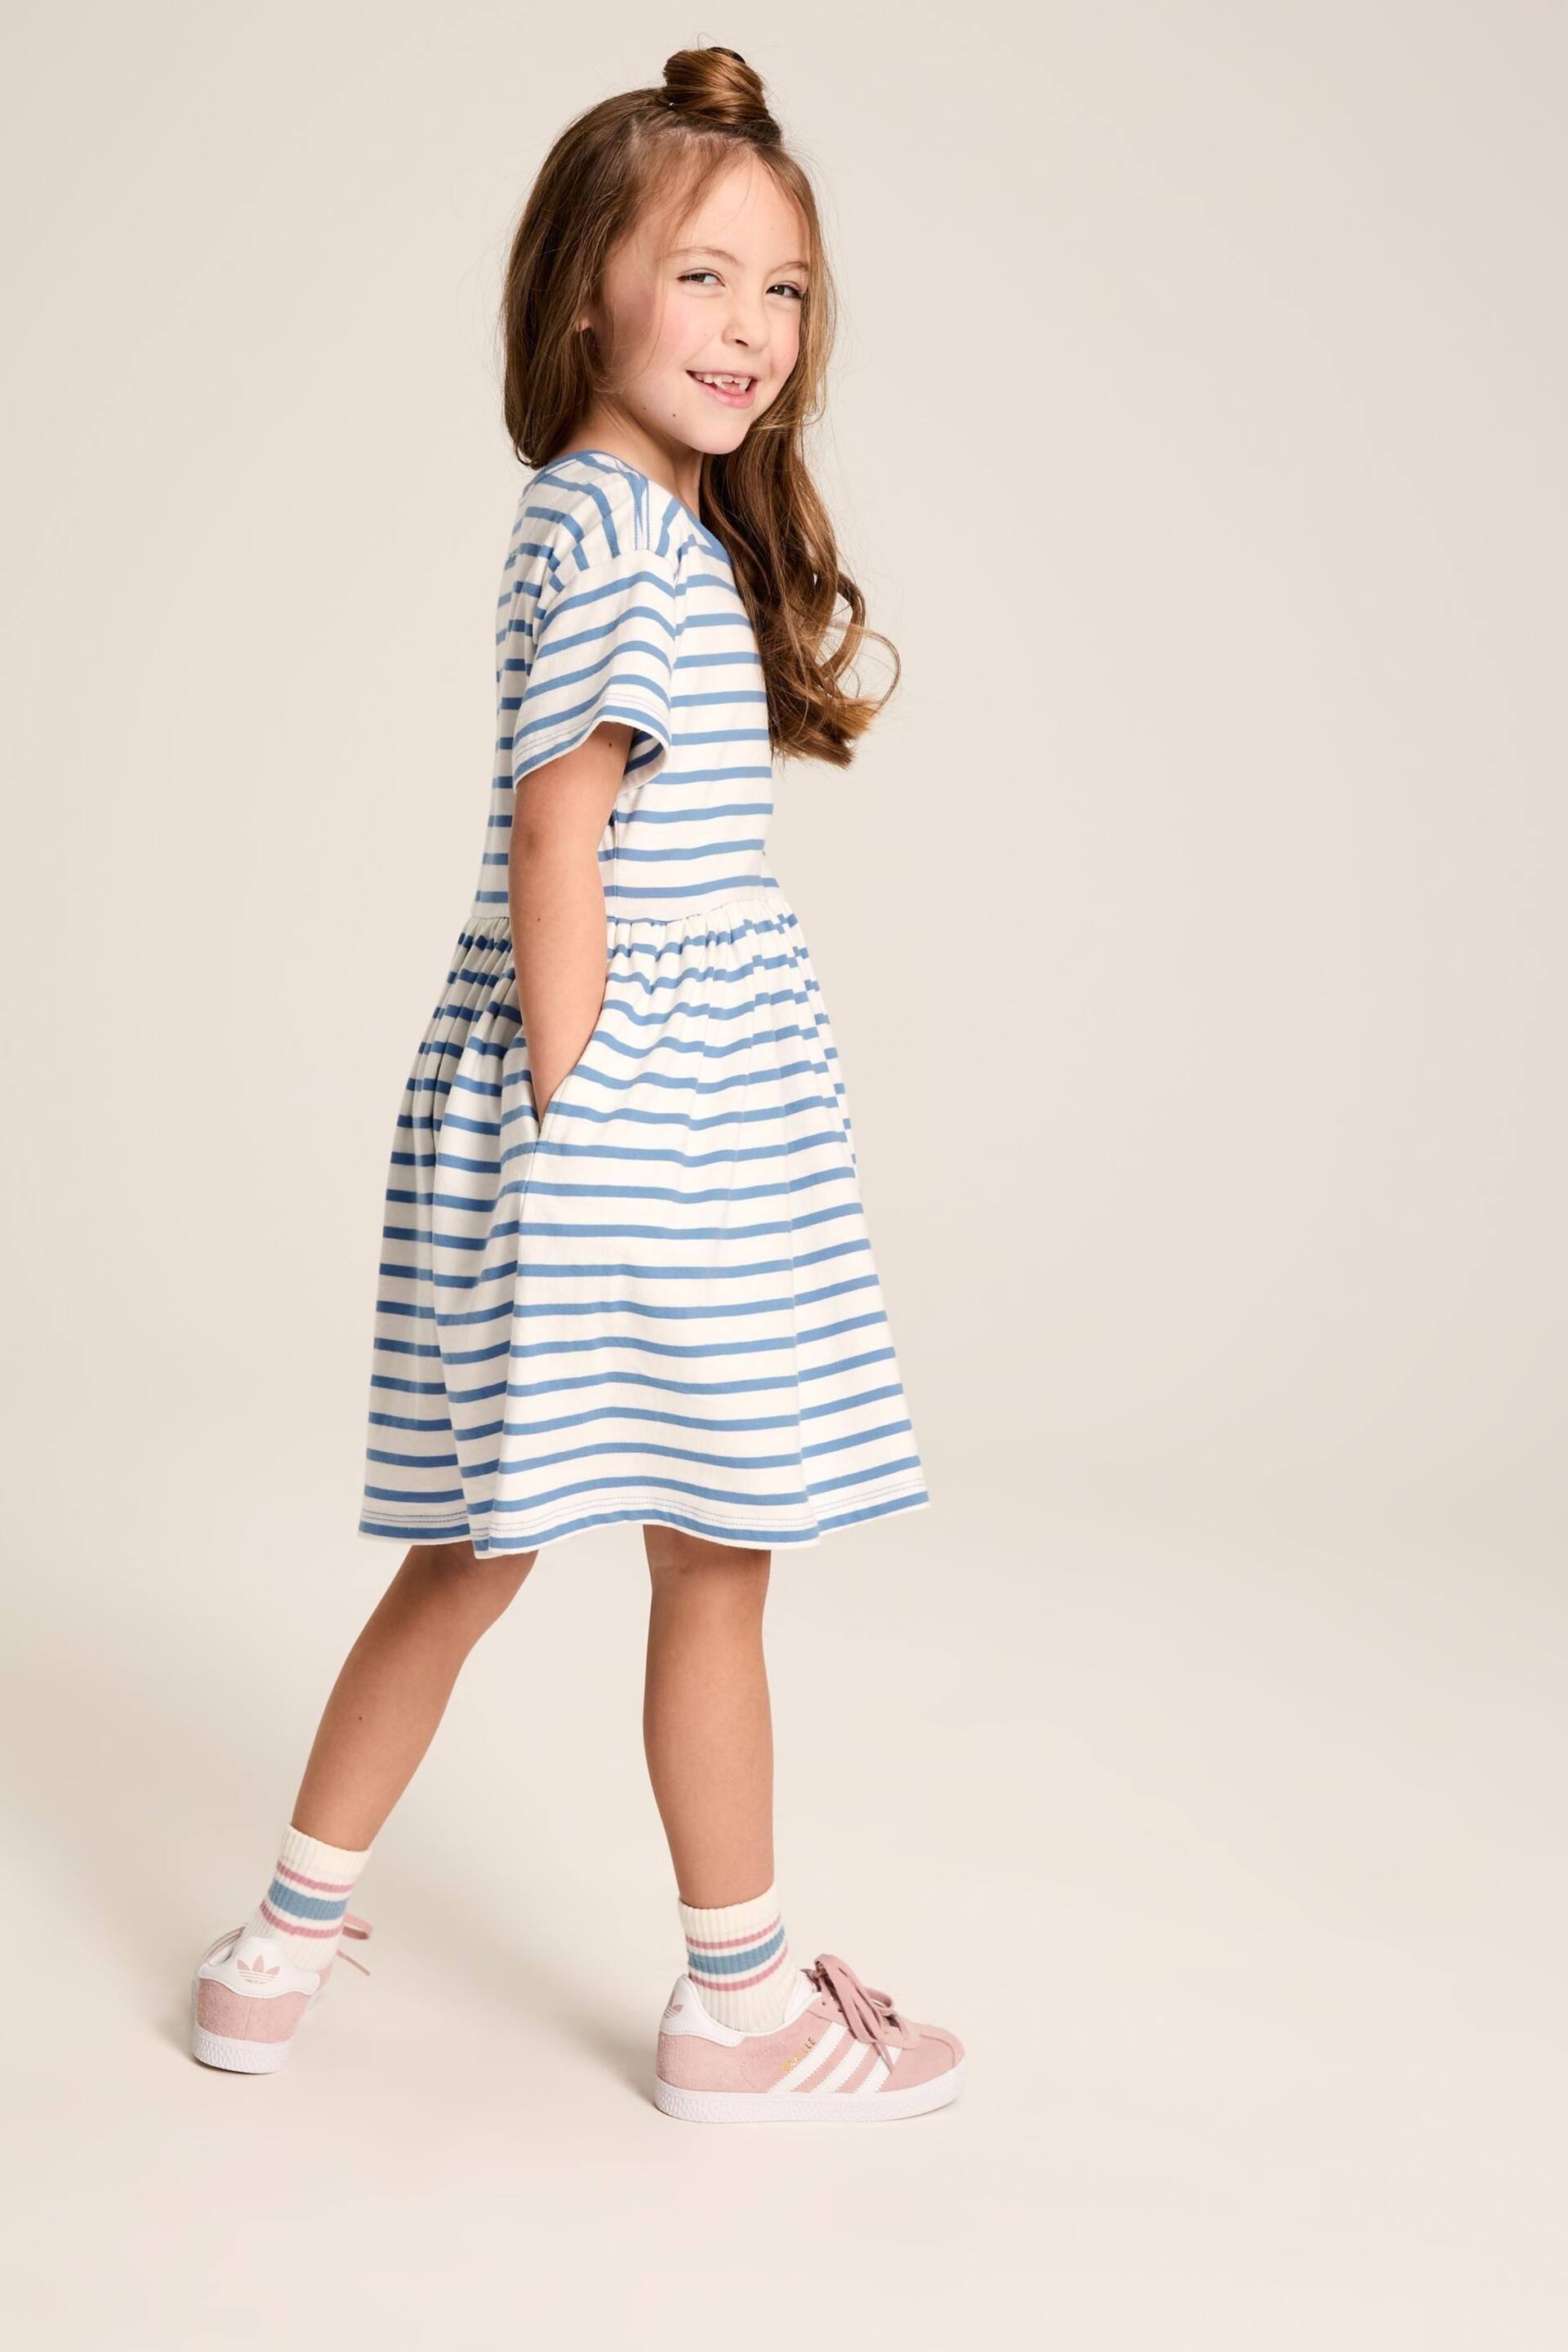 Joules Skye Blue Striped Jersey T-Shirt Dress - Image 3 of 10